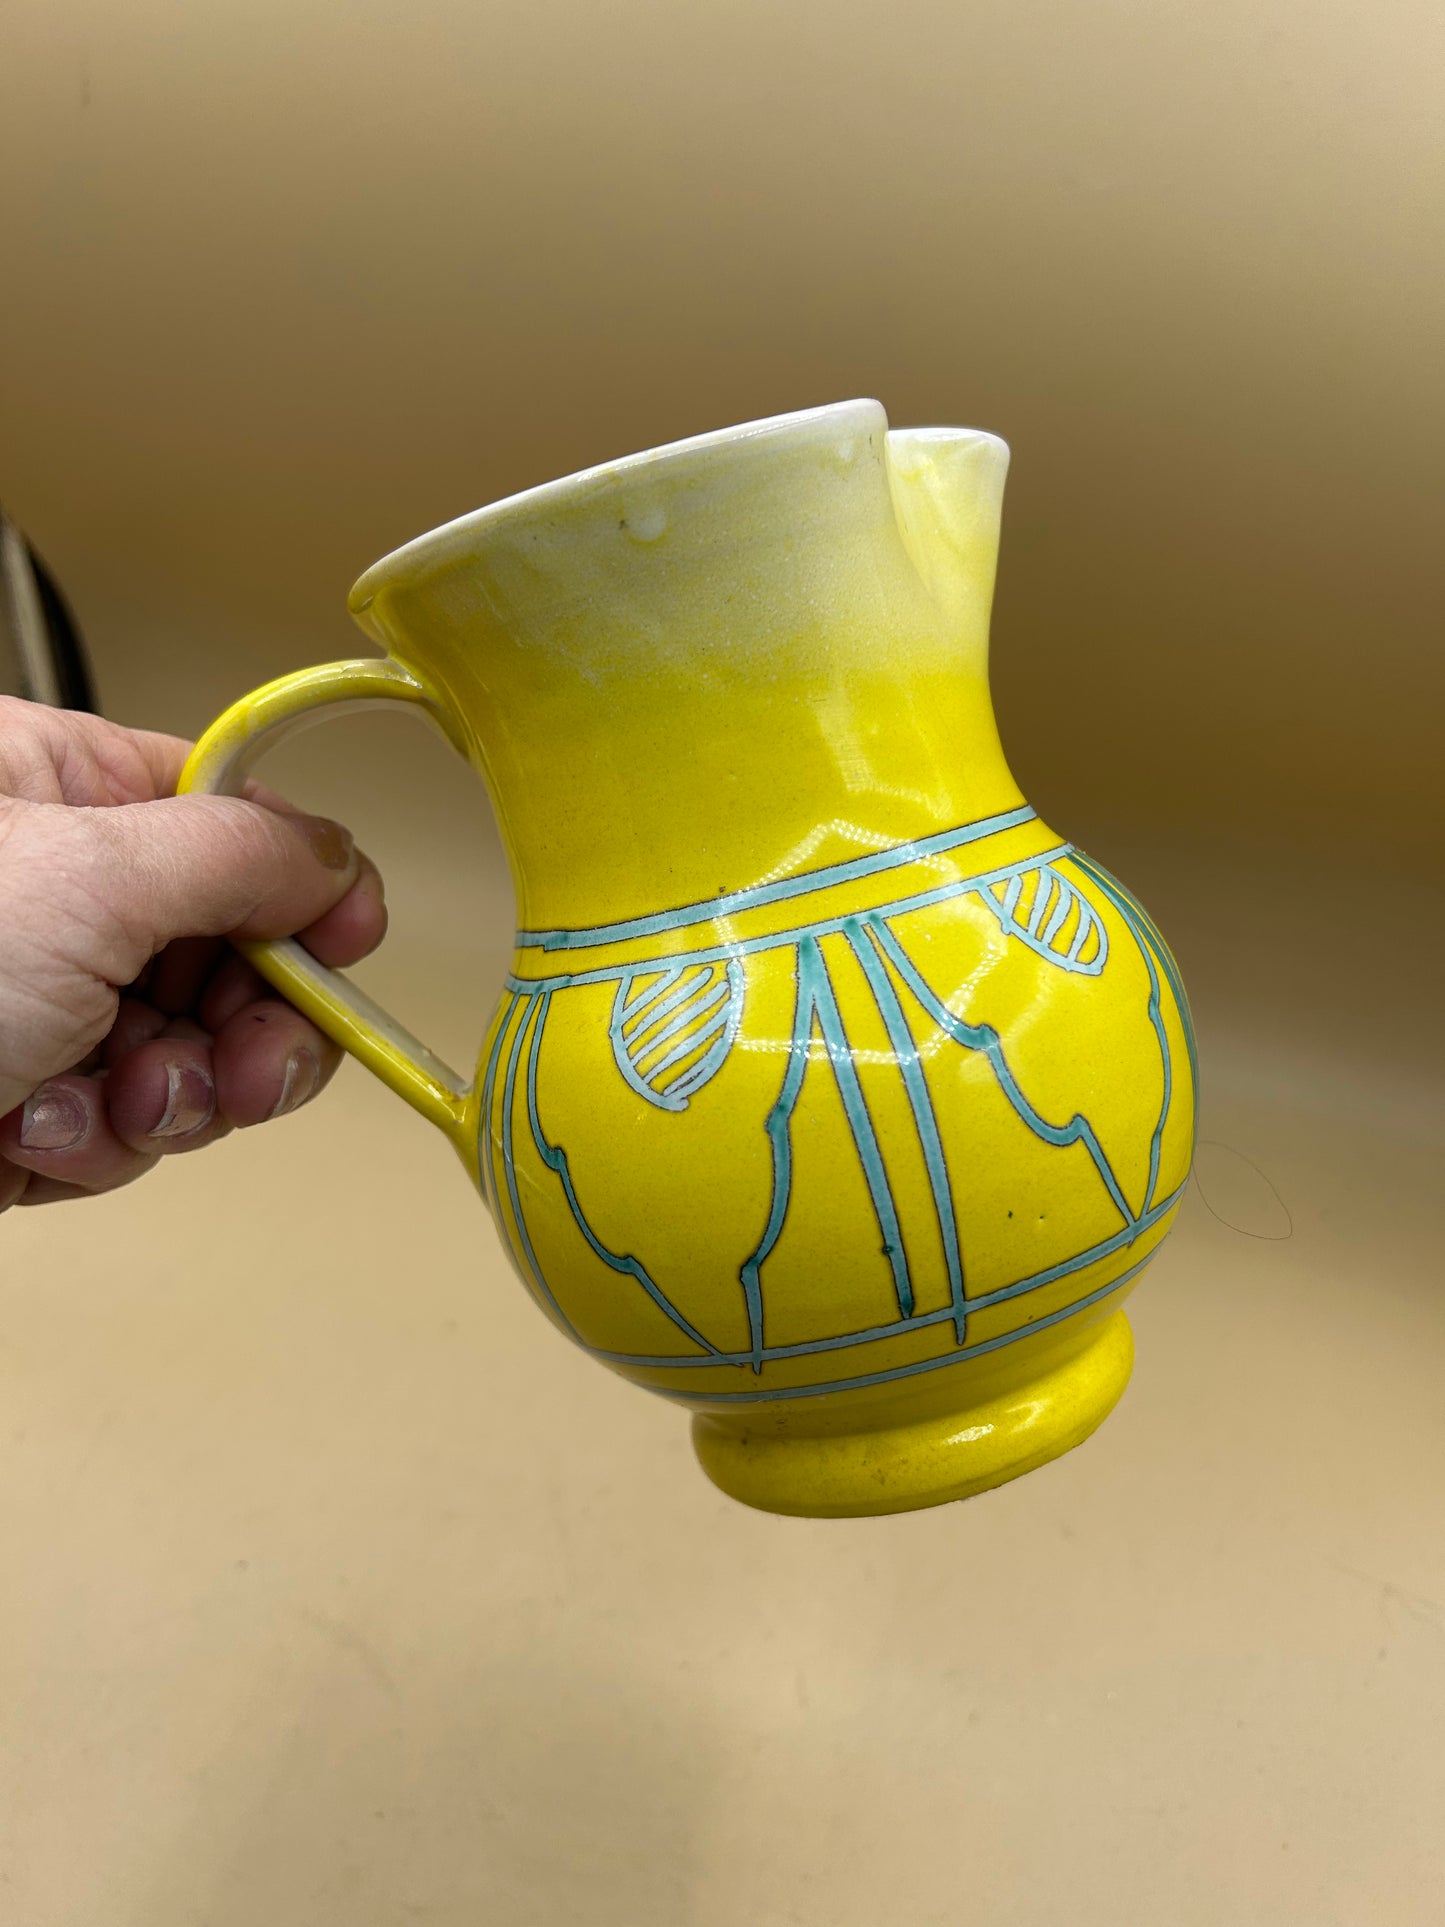 Hand-painted yellow ceramic jug